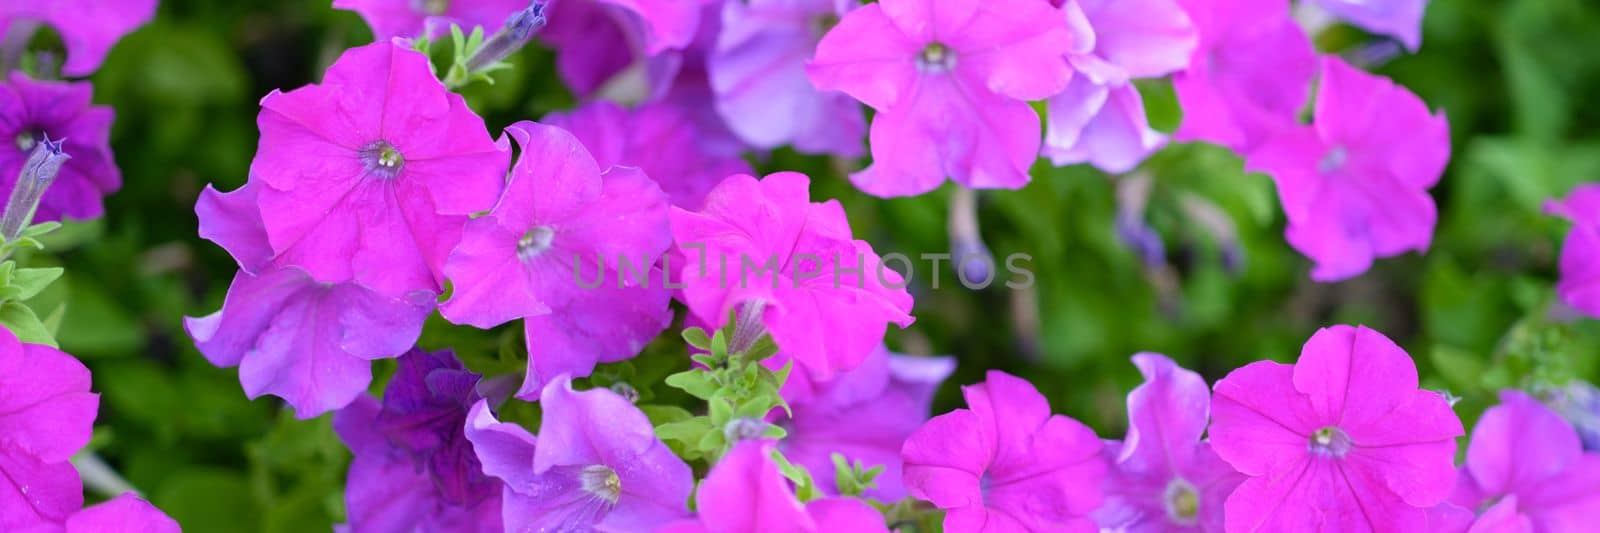 Beautiful pink petunia flowers in summer garden closeup by kuprevich